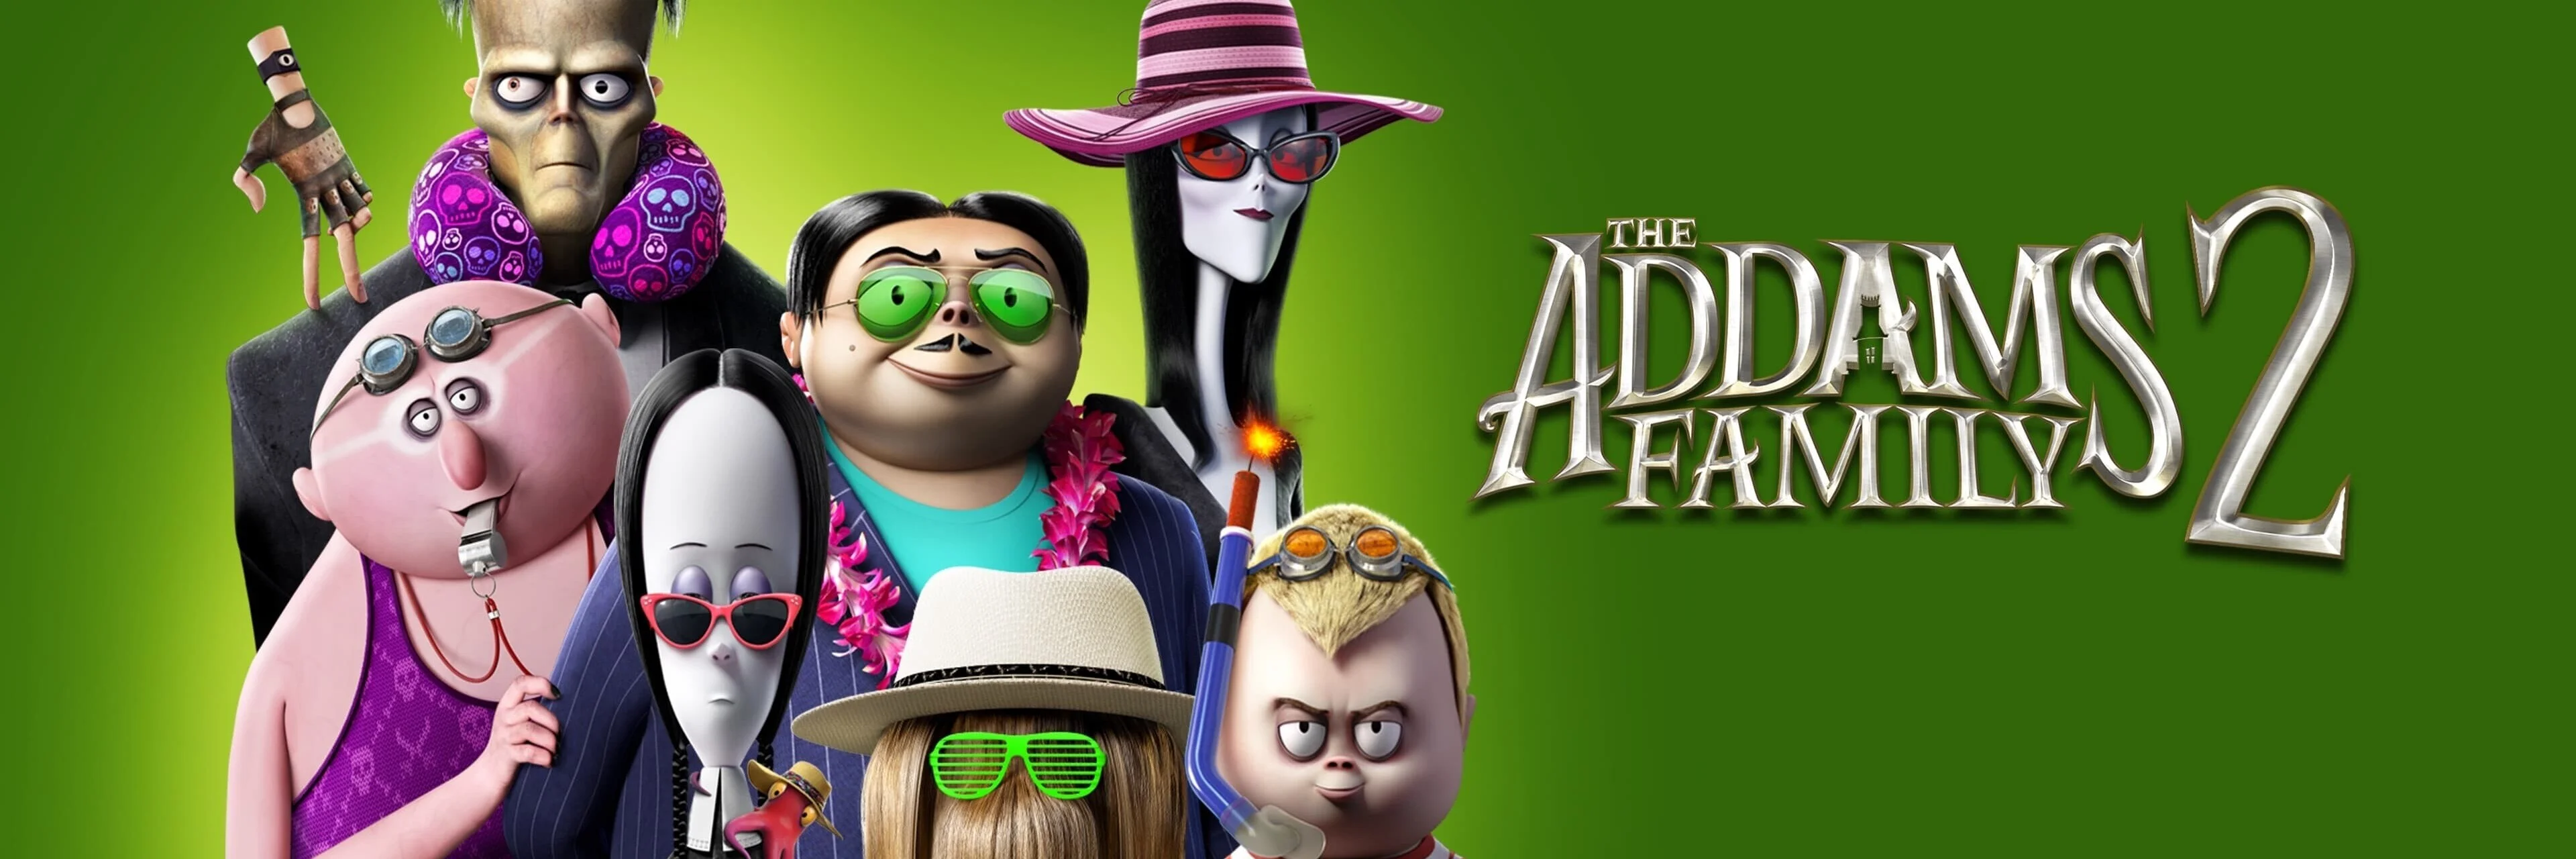 The Addams Family 2 4K 2021 big poster